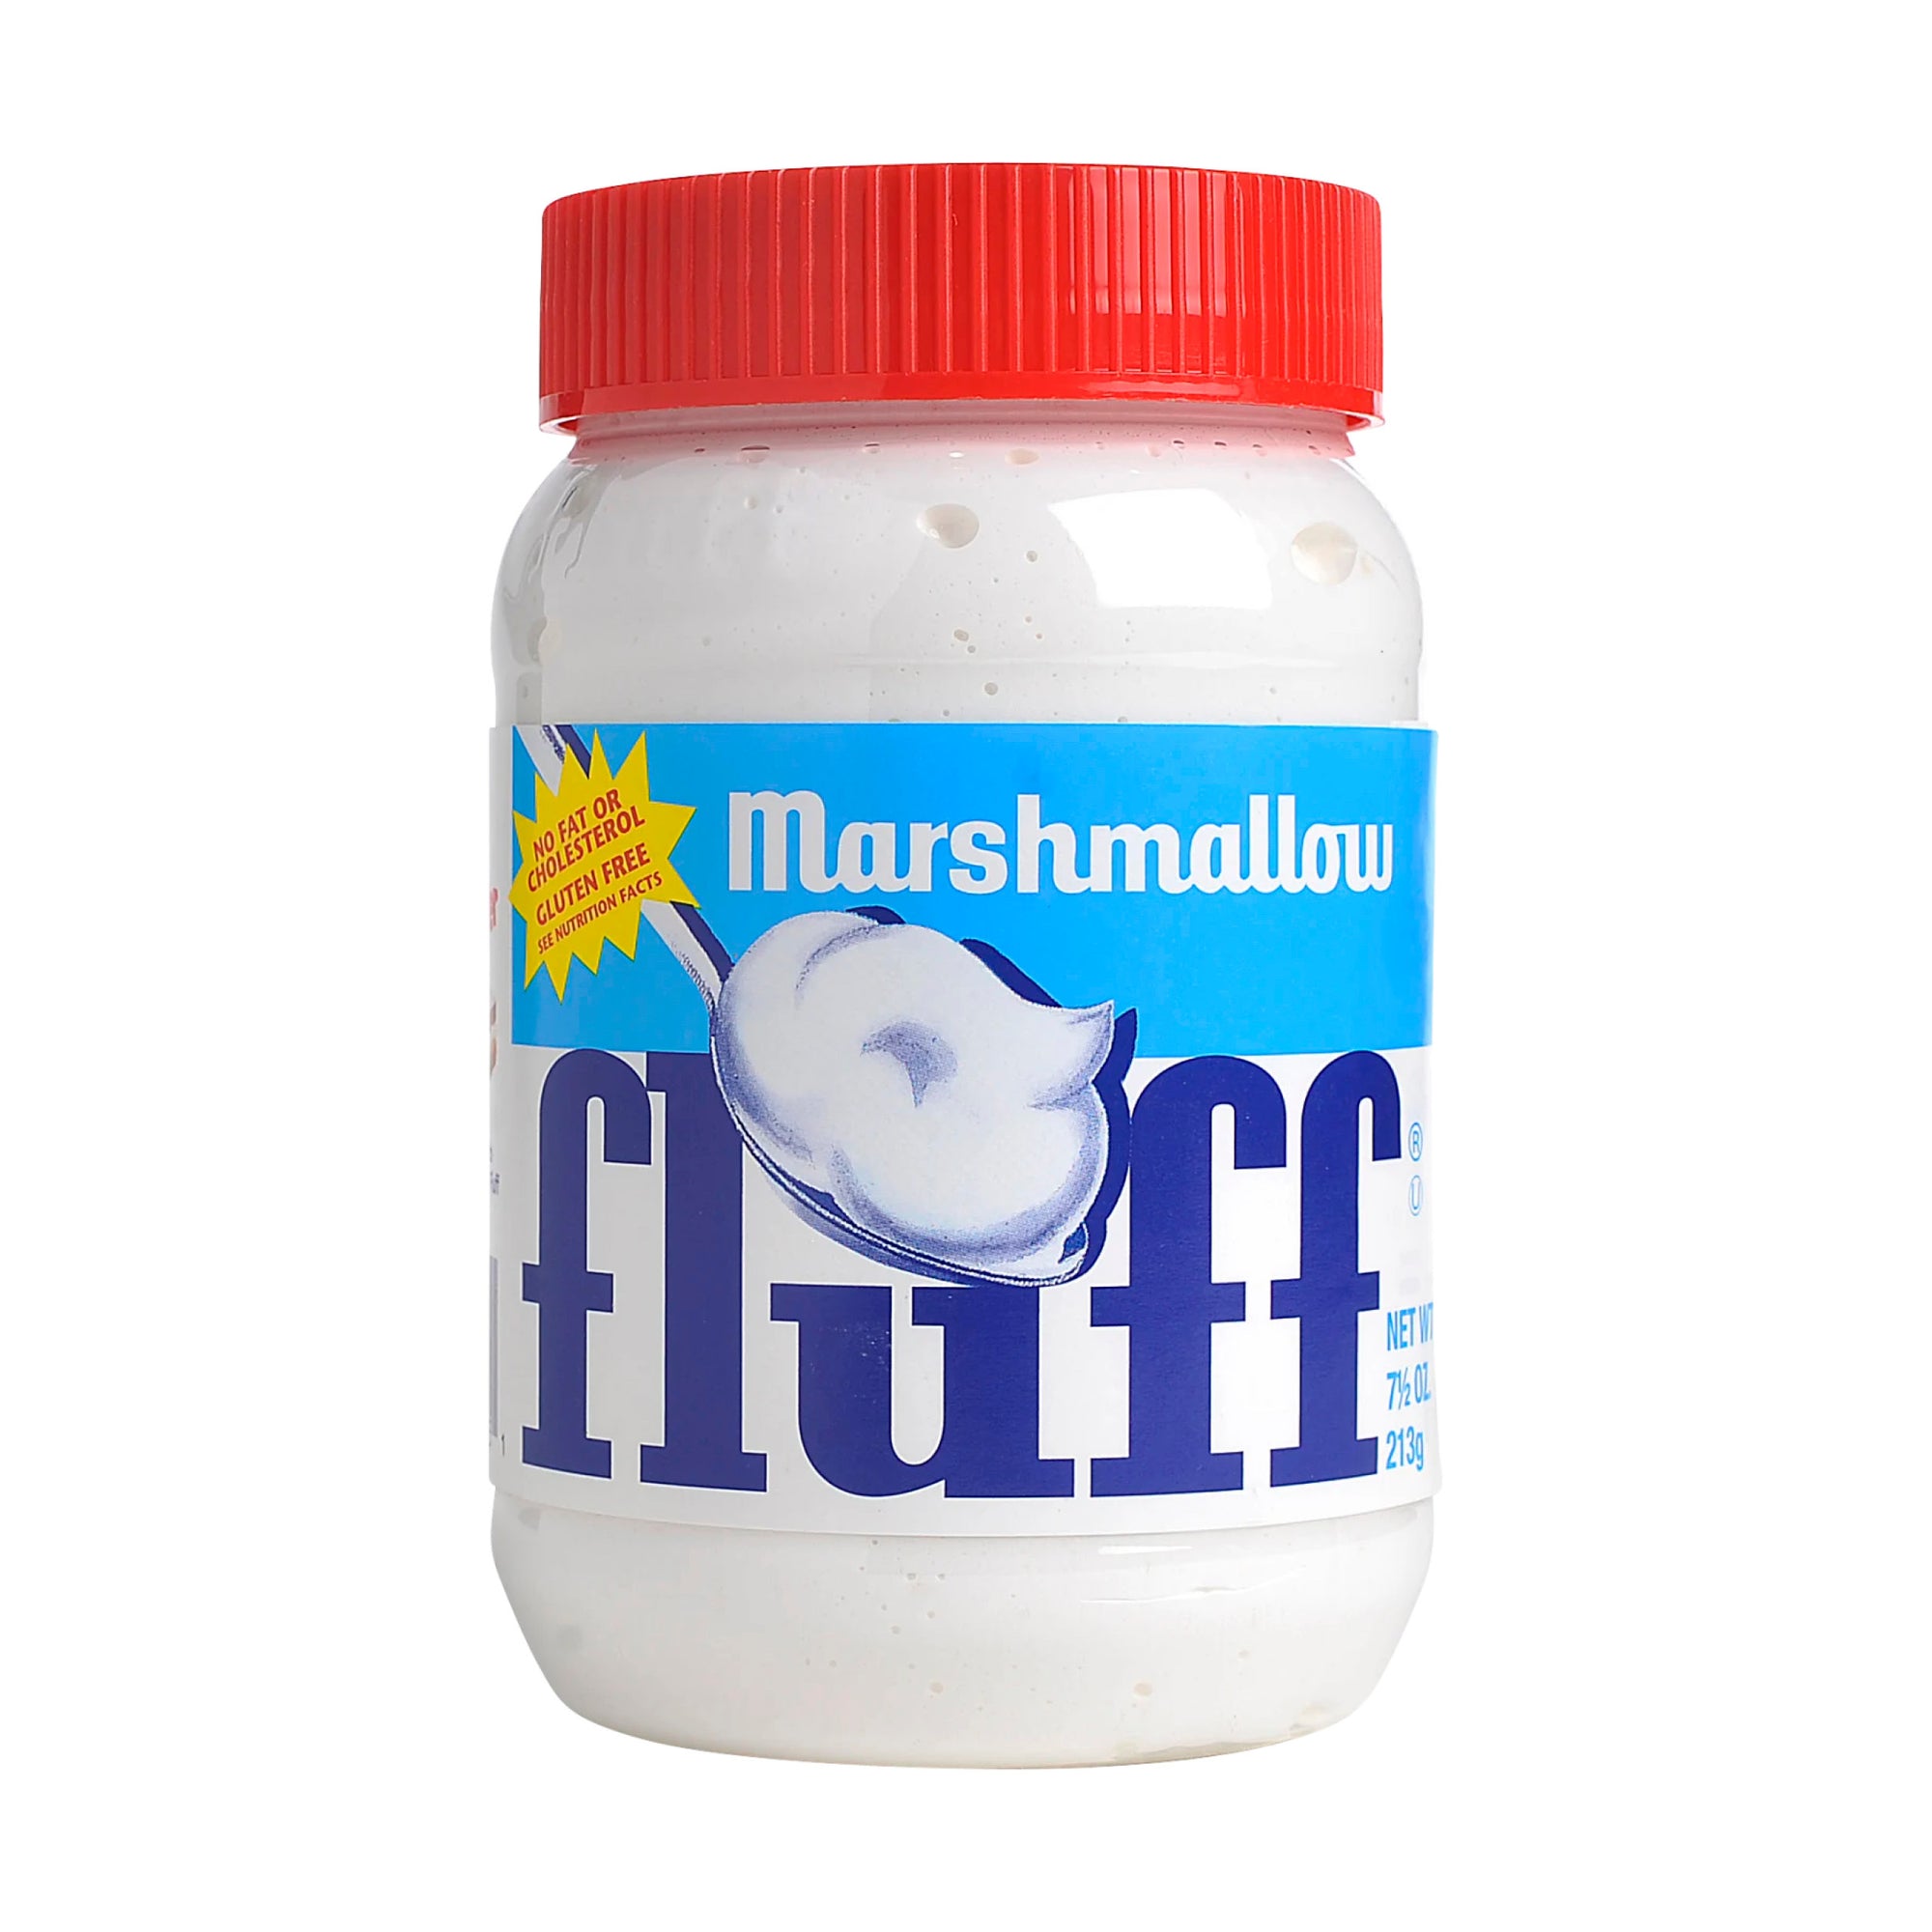 Marshmallow Fluff Original 213 g